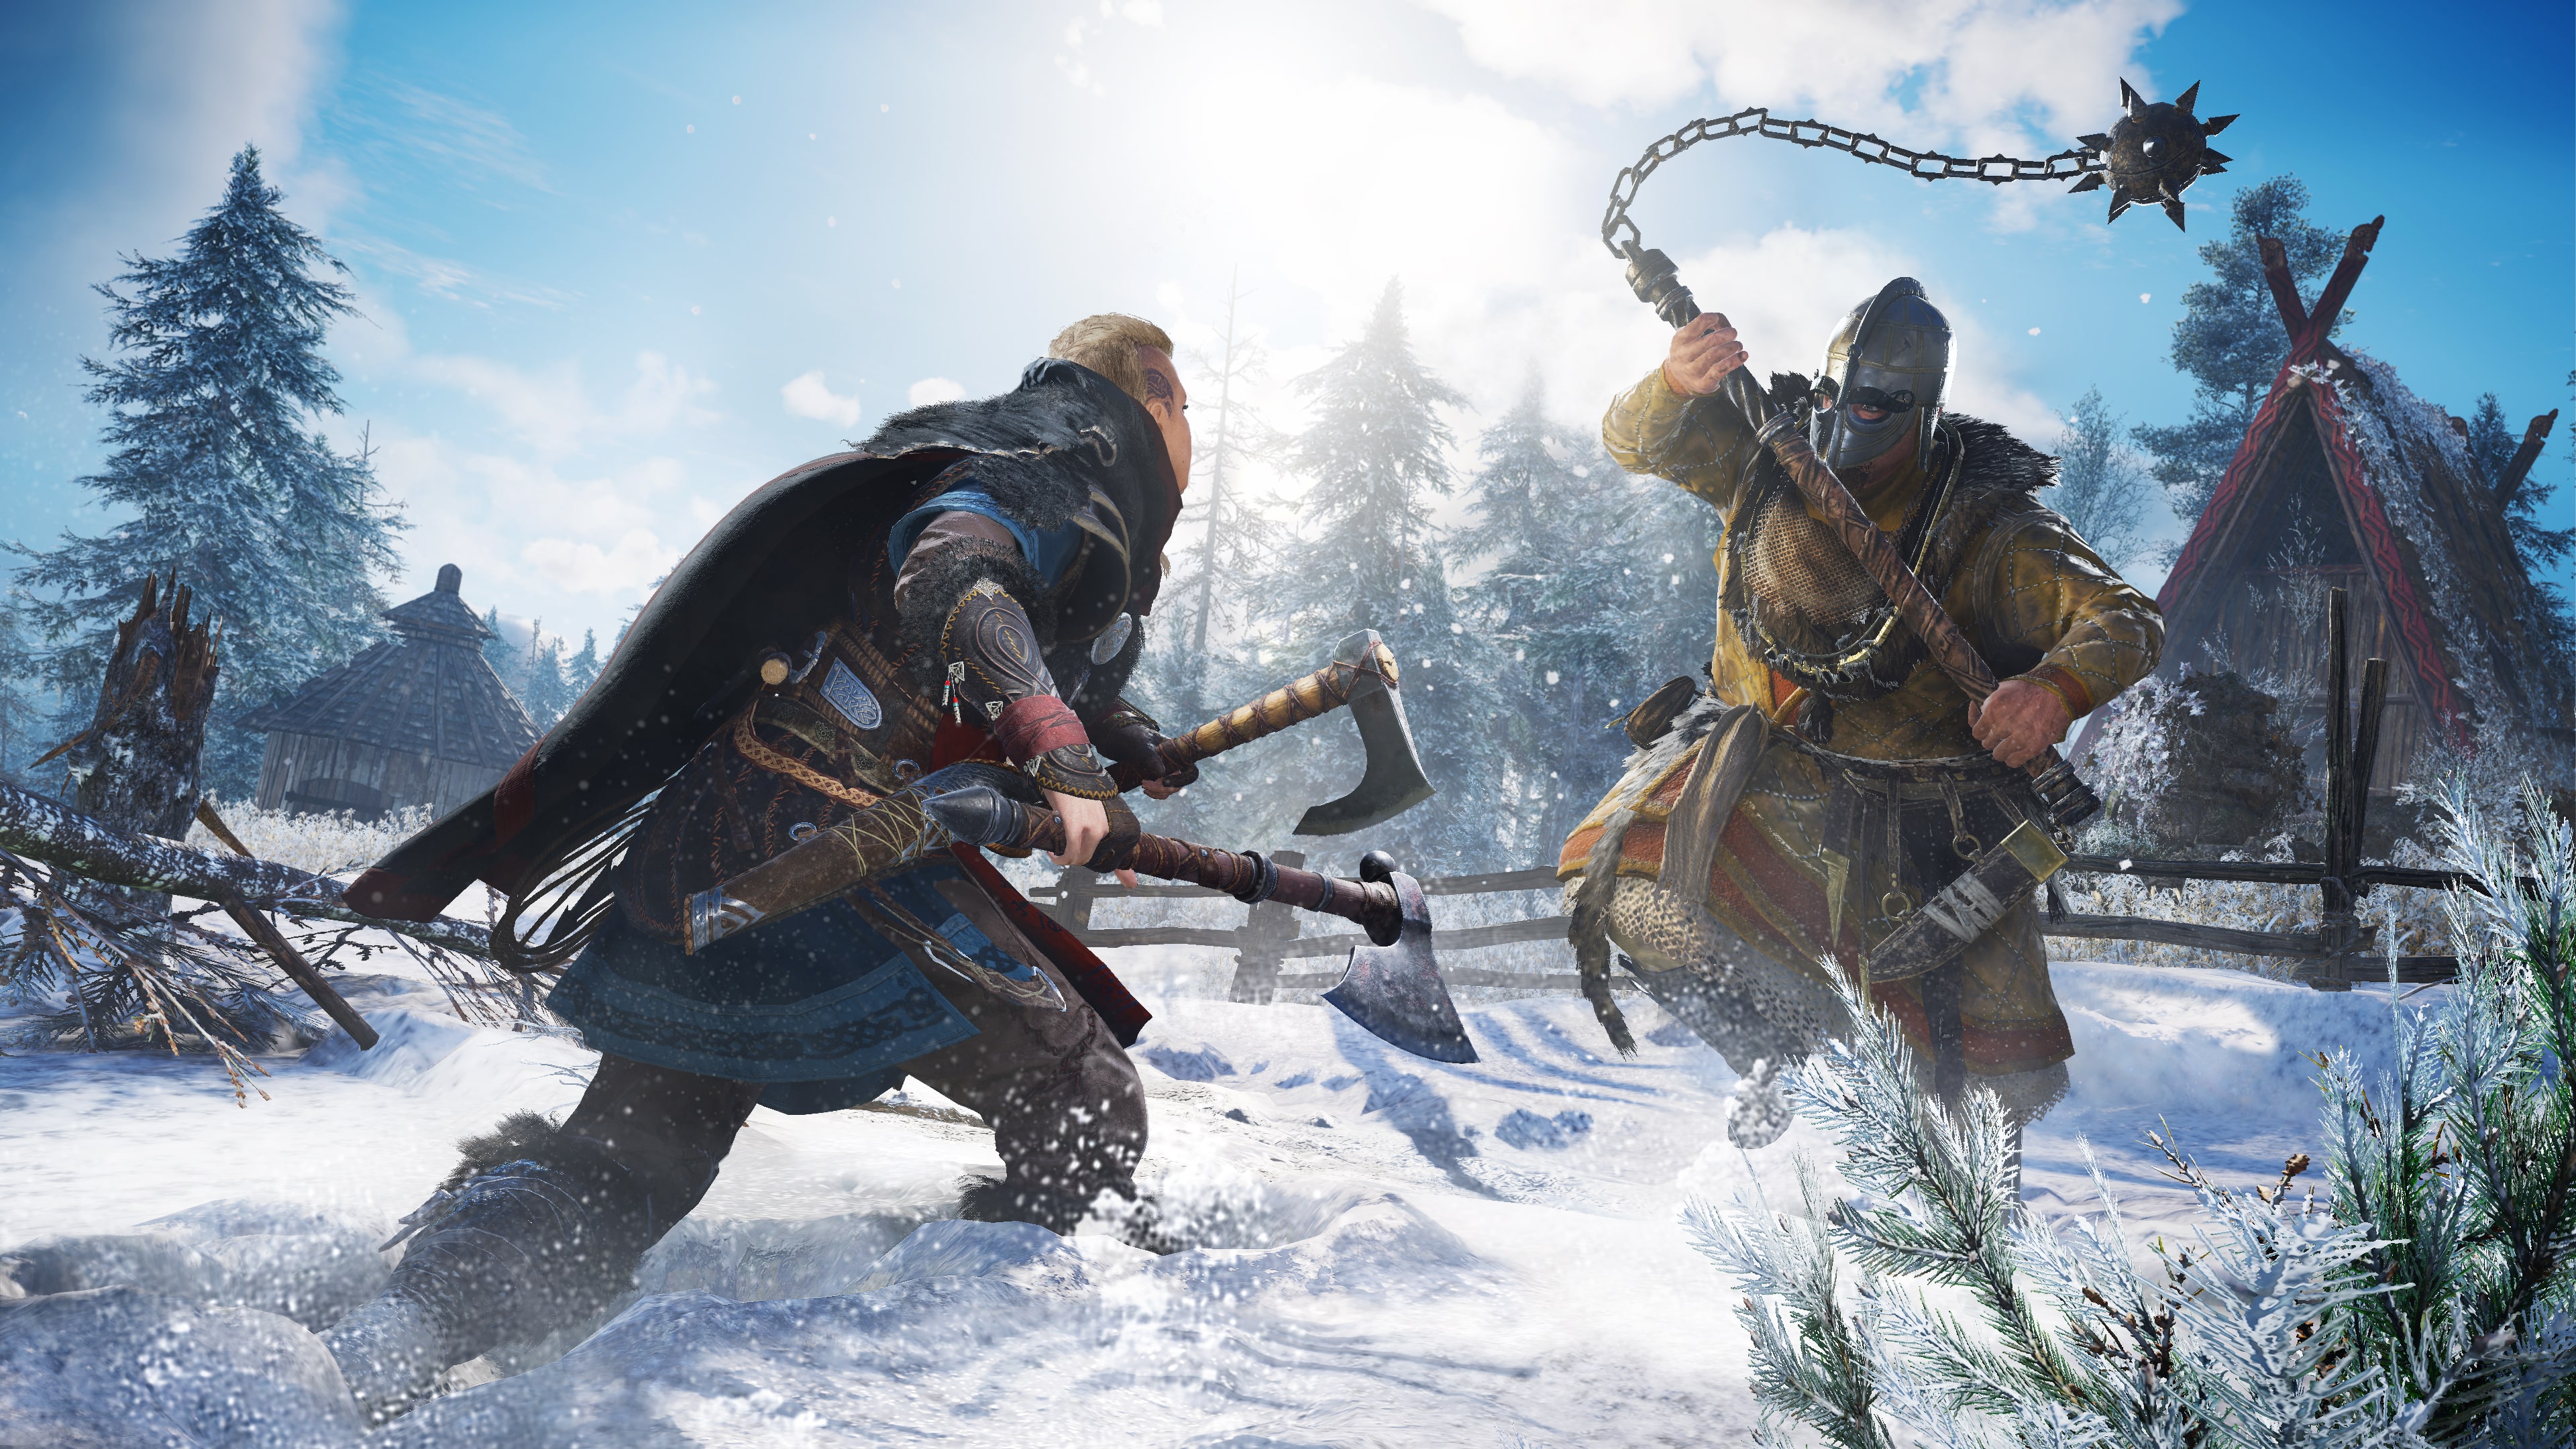 Save 60% on Assassin's Creed® Valhalla - Dawn of Ragnarök on Steam